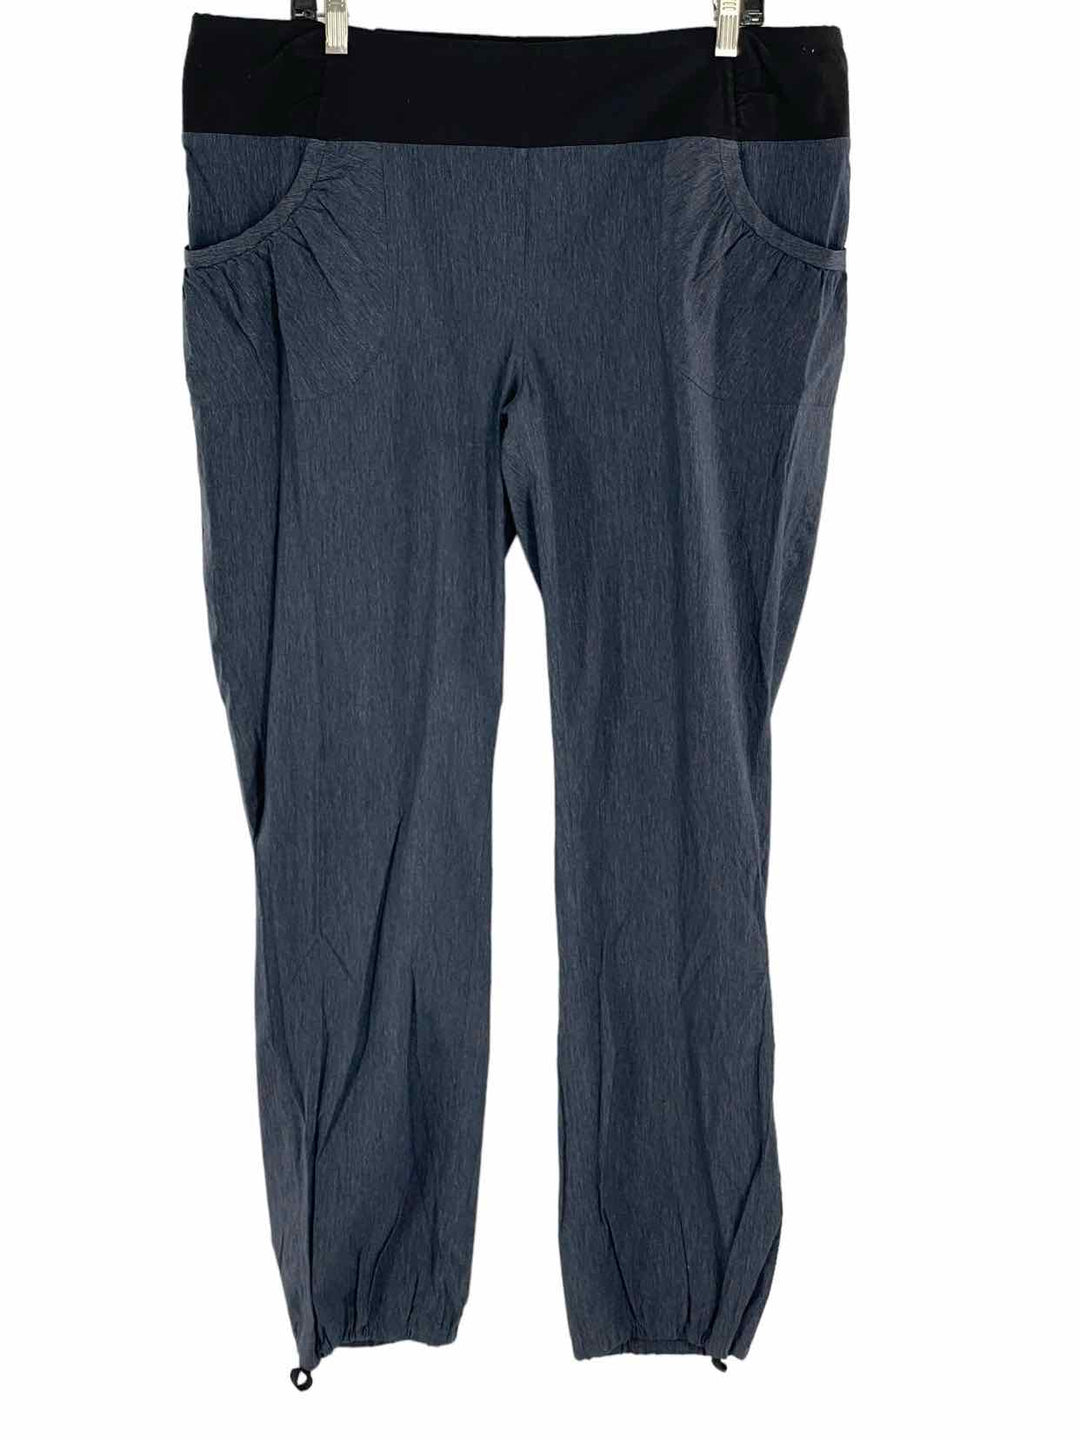 PrAna Size 1X Blue Athletic Pants